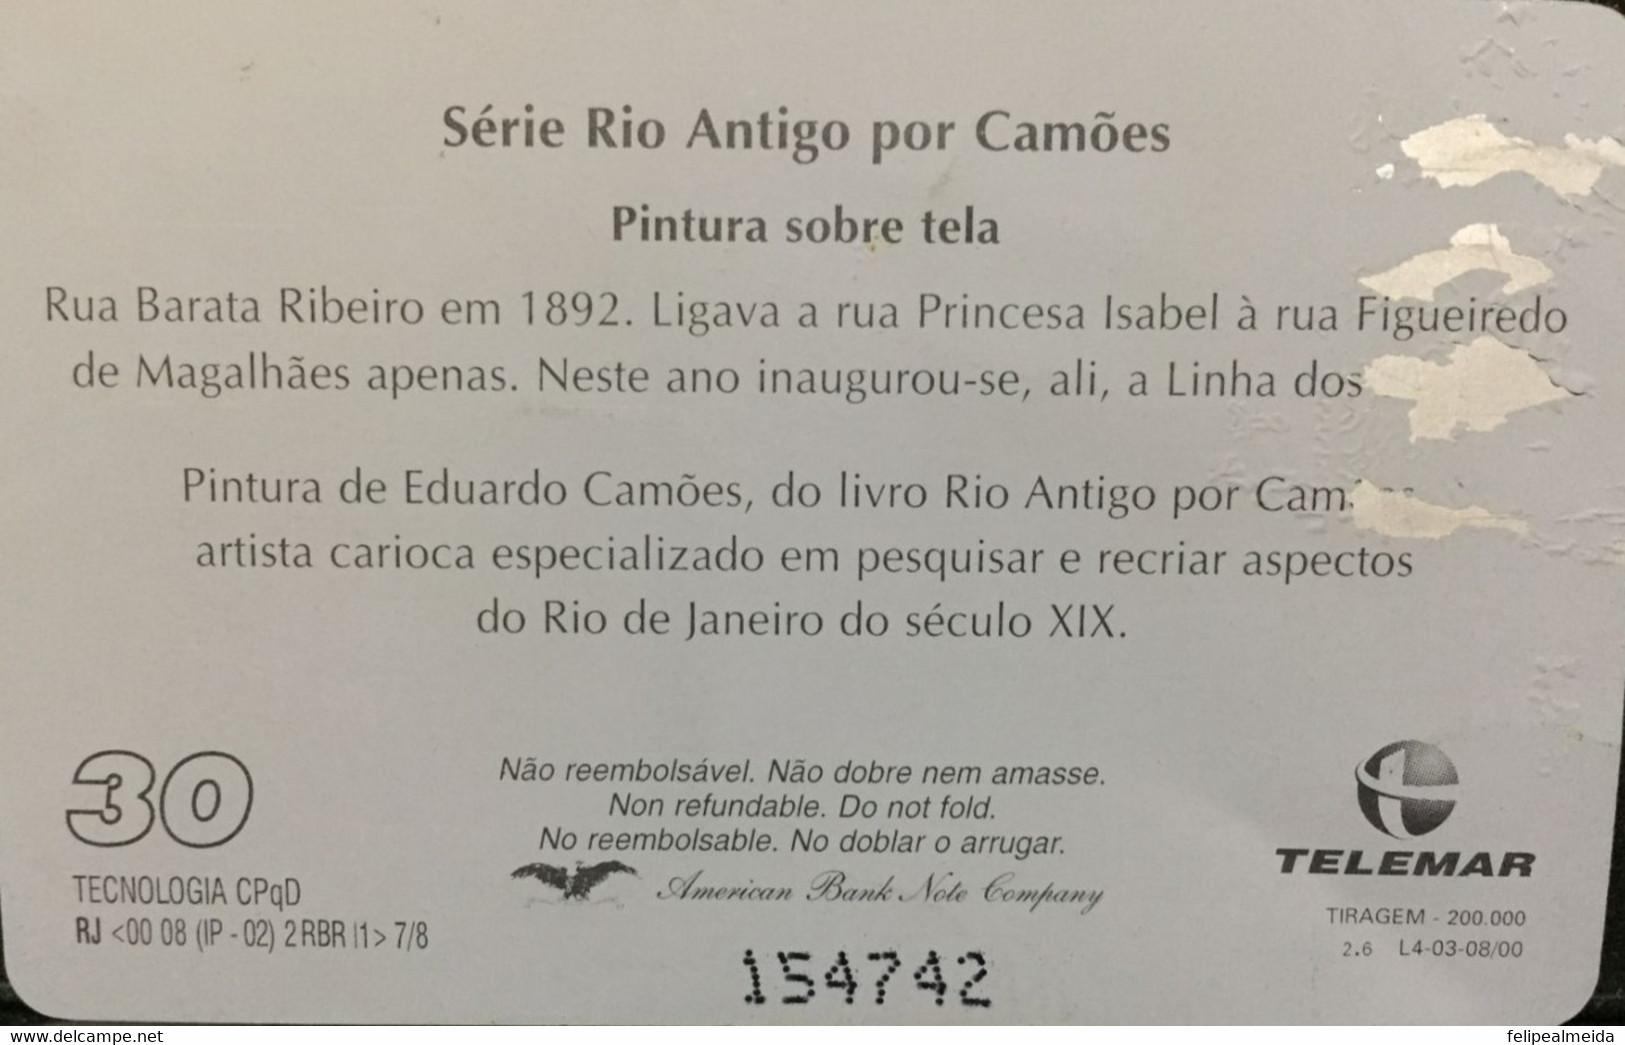 Phone Card Manufactured By Telebras In 2000 - Series Rio Antigo By Camões - Painting Rua Barata Ribeiro In 1892 By Paint - Peinture